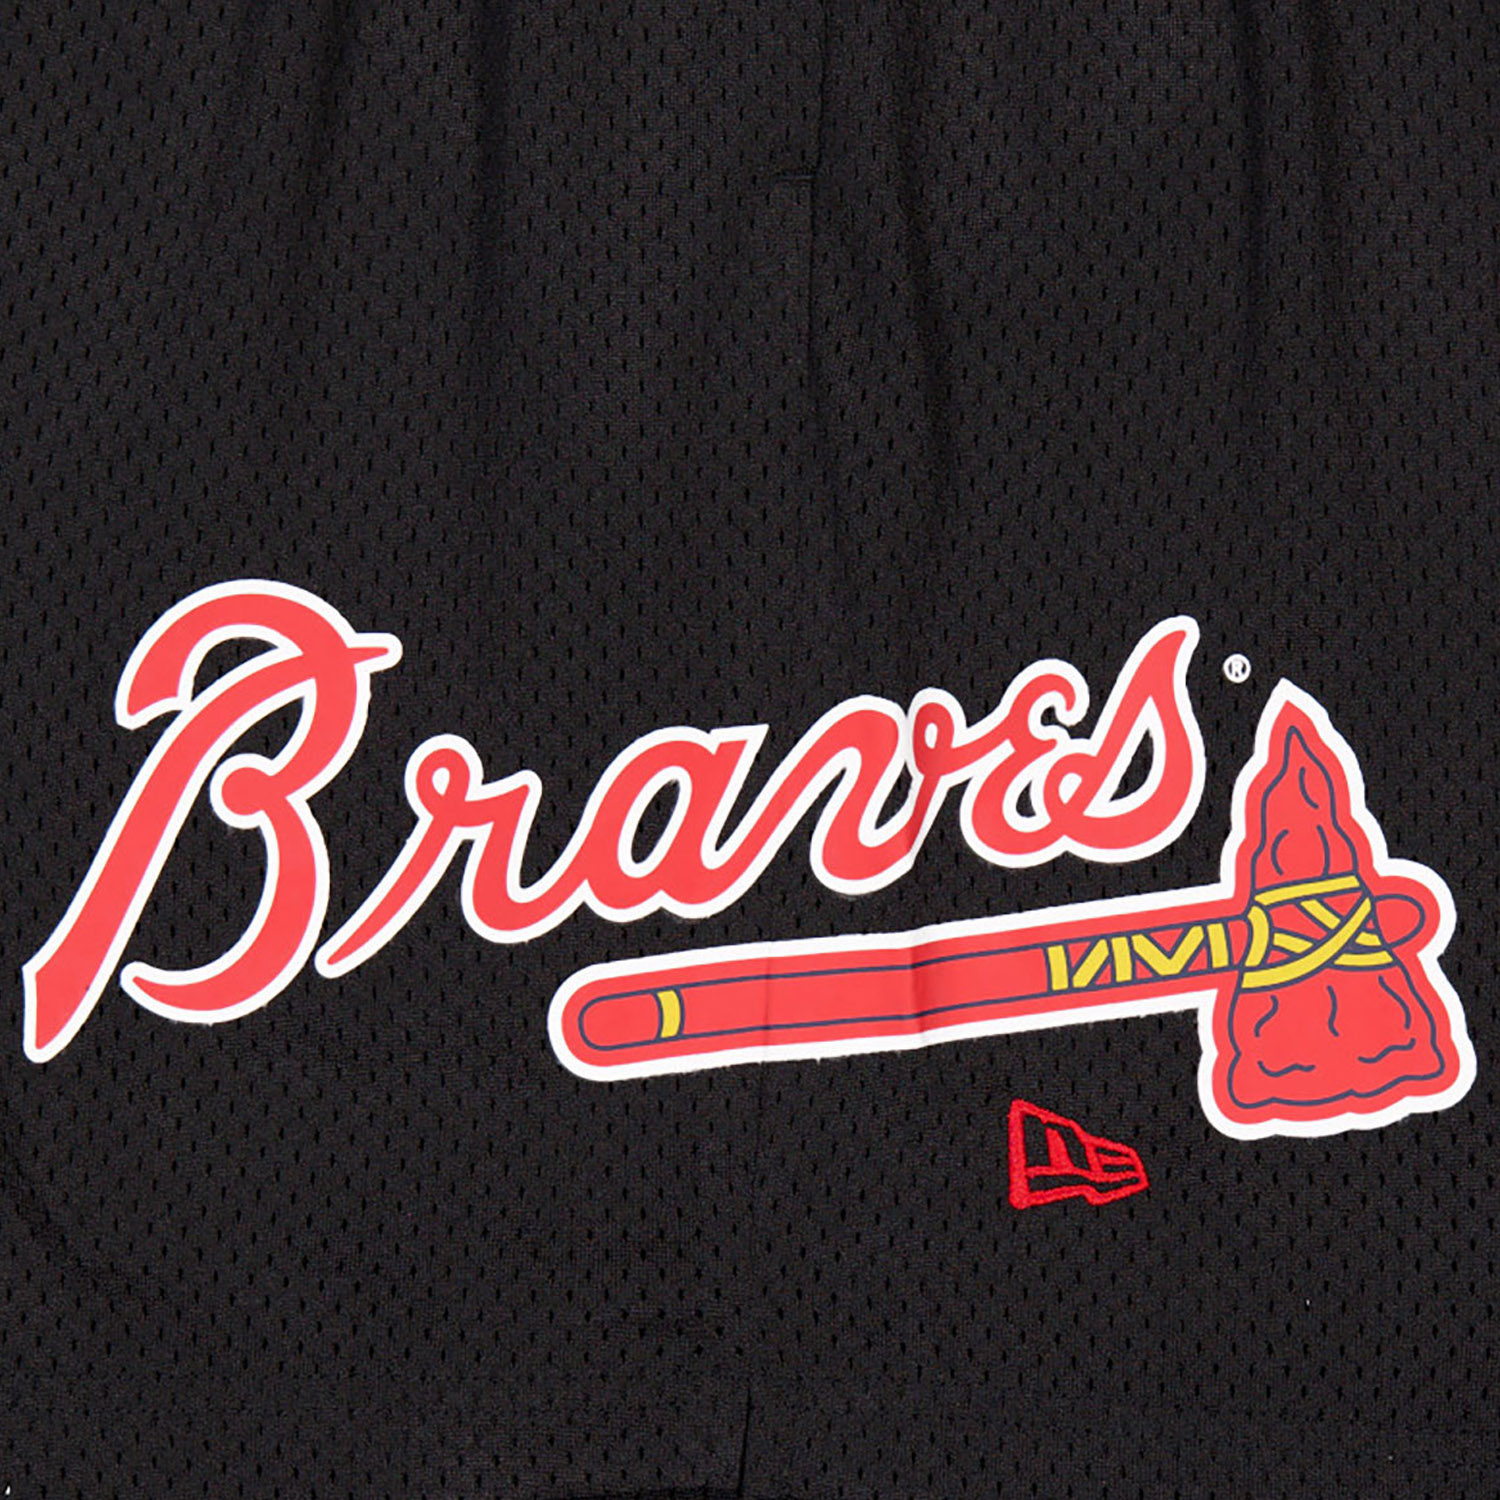 Atlanta Braves MLB Custom Black Mesh Shorts